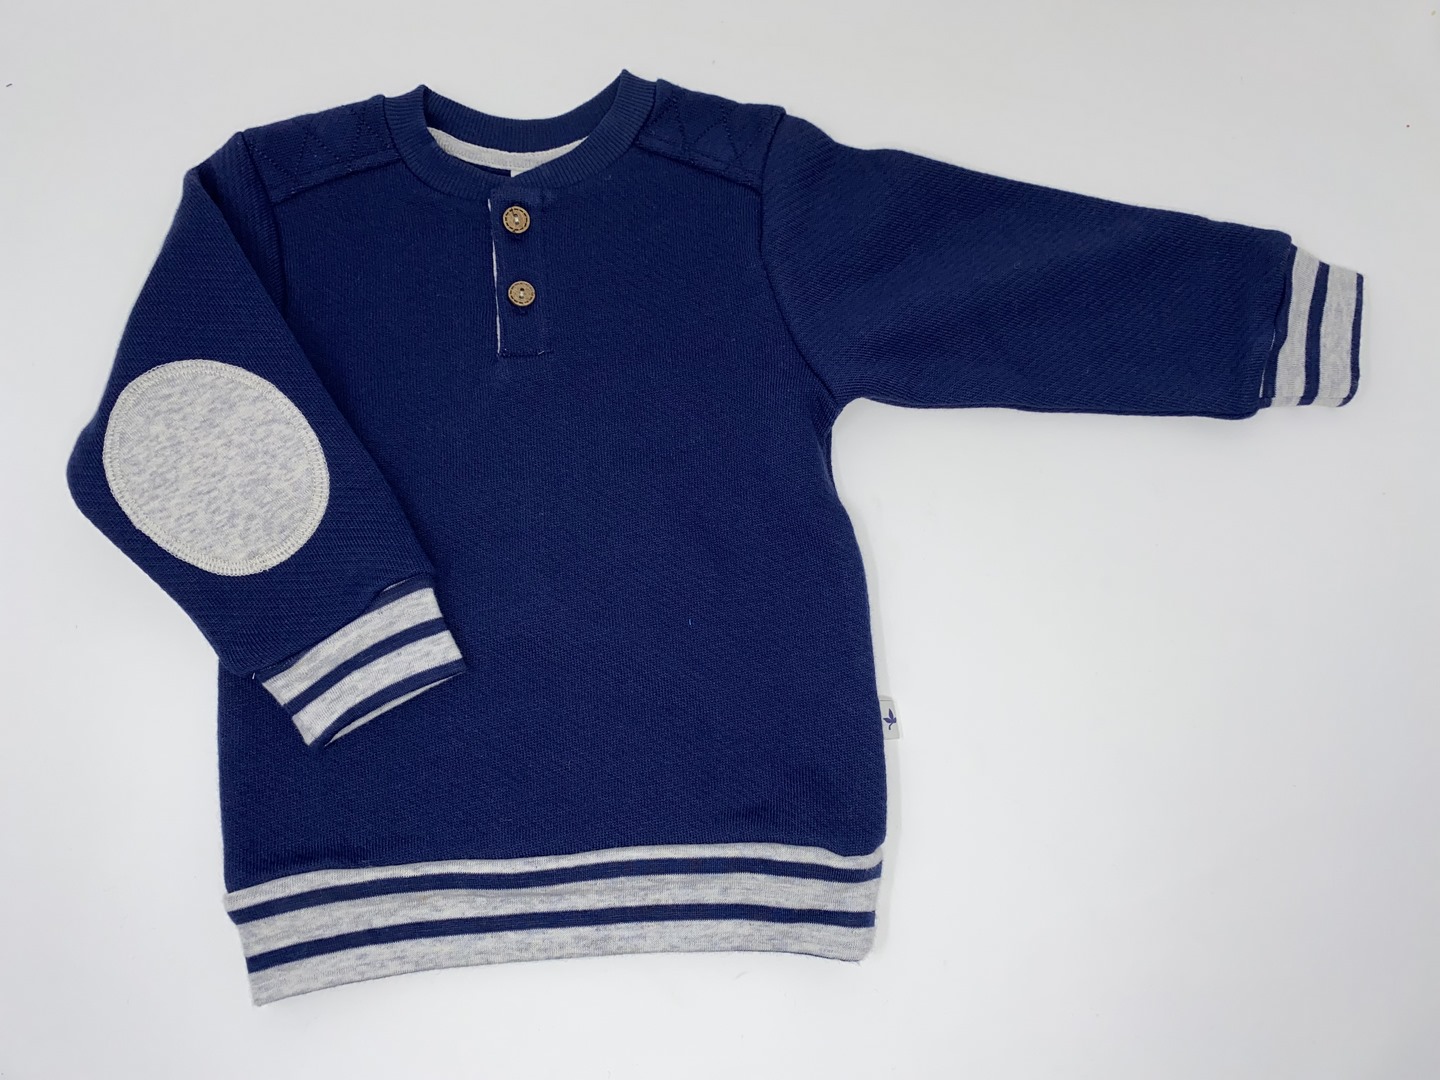 Leela Cotton Baby / Kinder Sweat Shirt Sweatshirt Pullover Maineblau 100% Bio Baumwolle